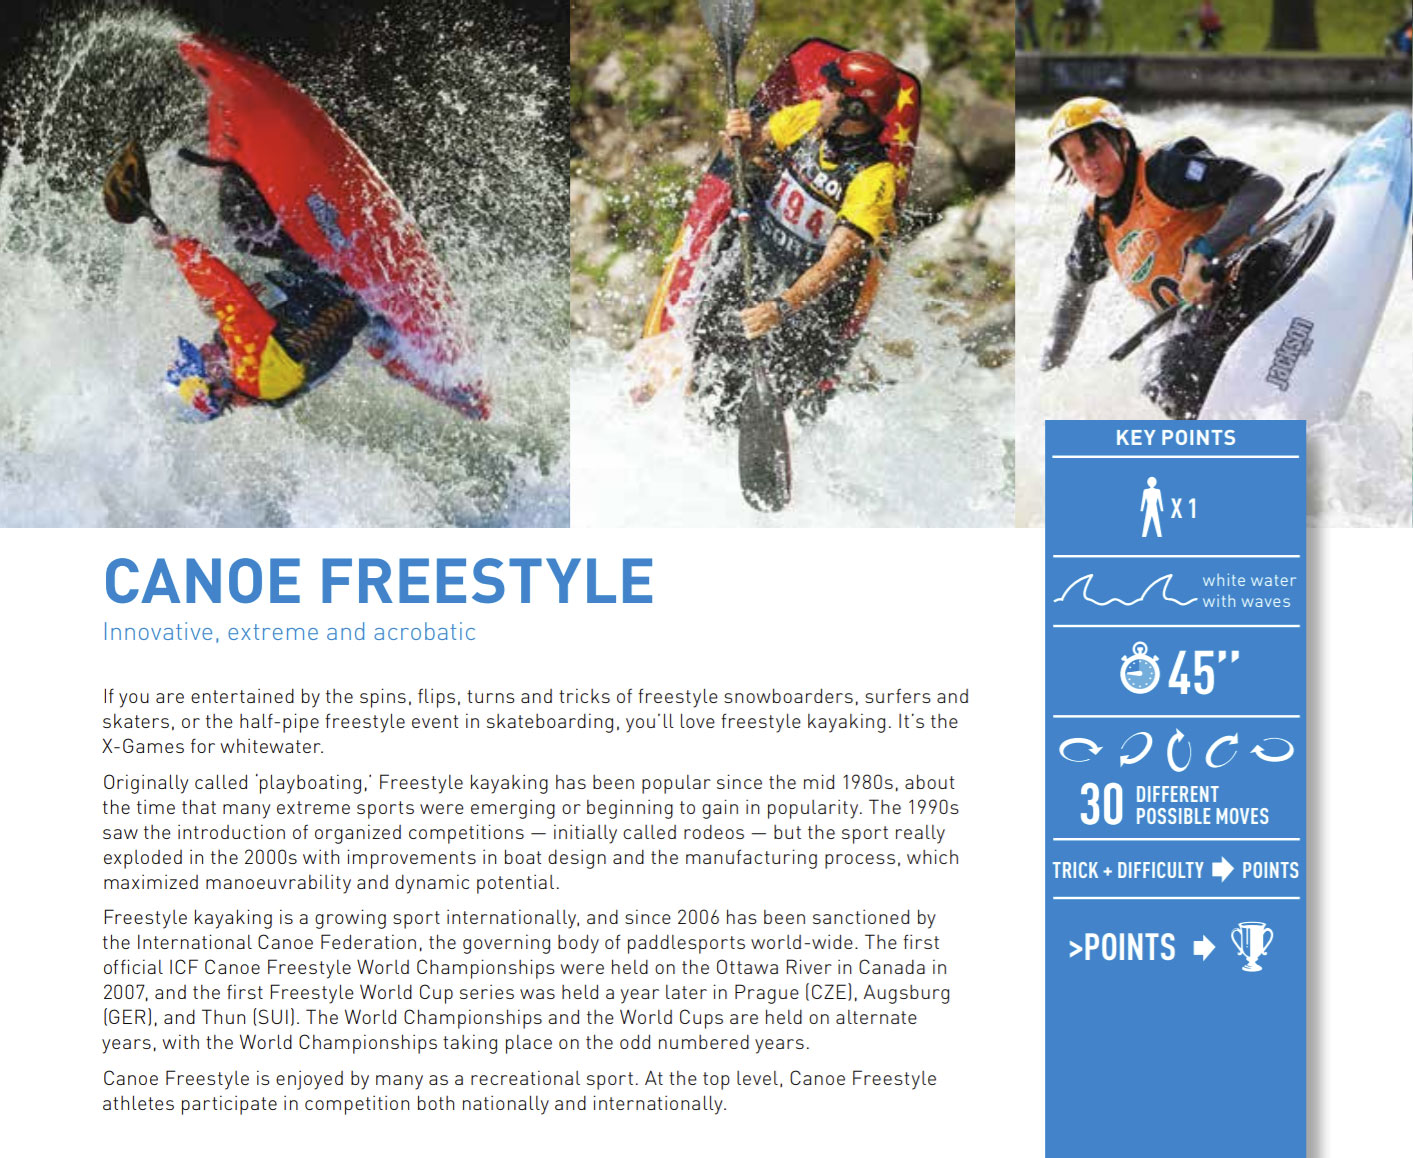 Canoe Freestyle - фрагмент буклета ICF